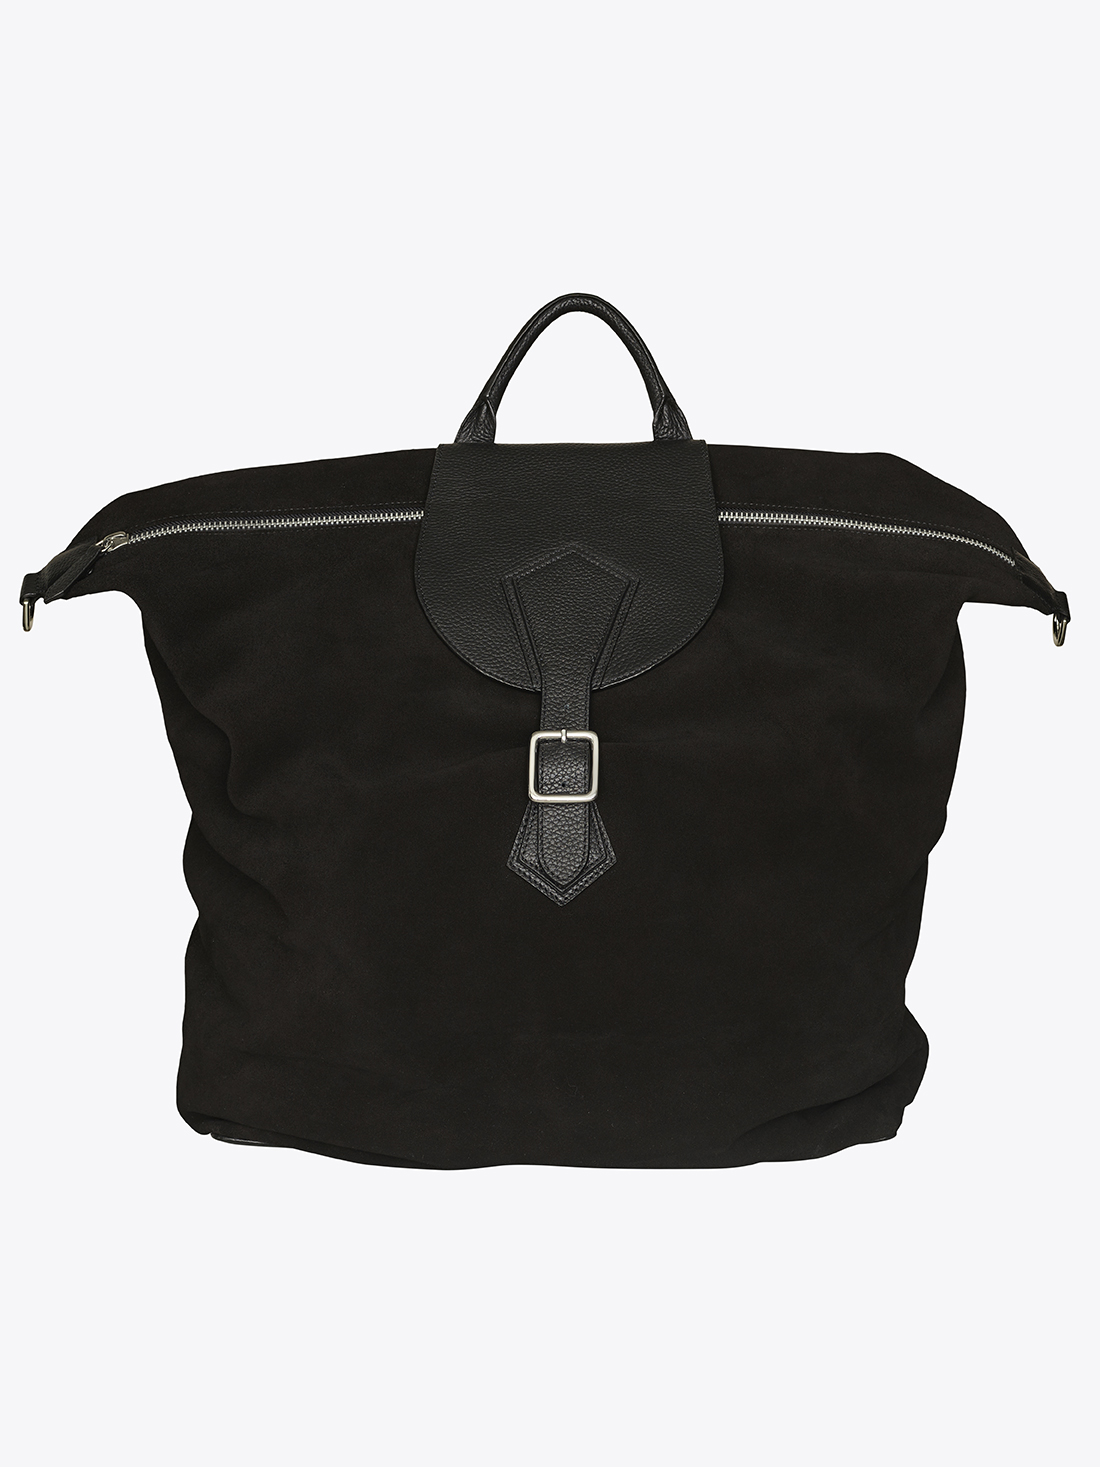 0130501-230100_Large single handle saddle bag_black_front